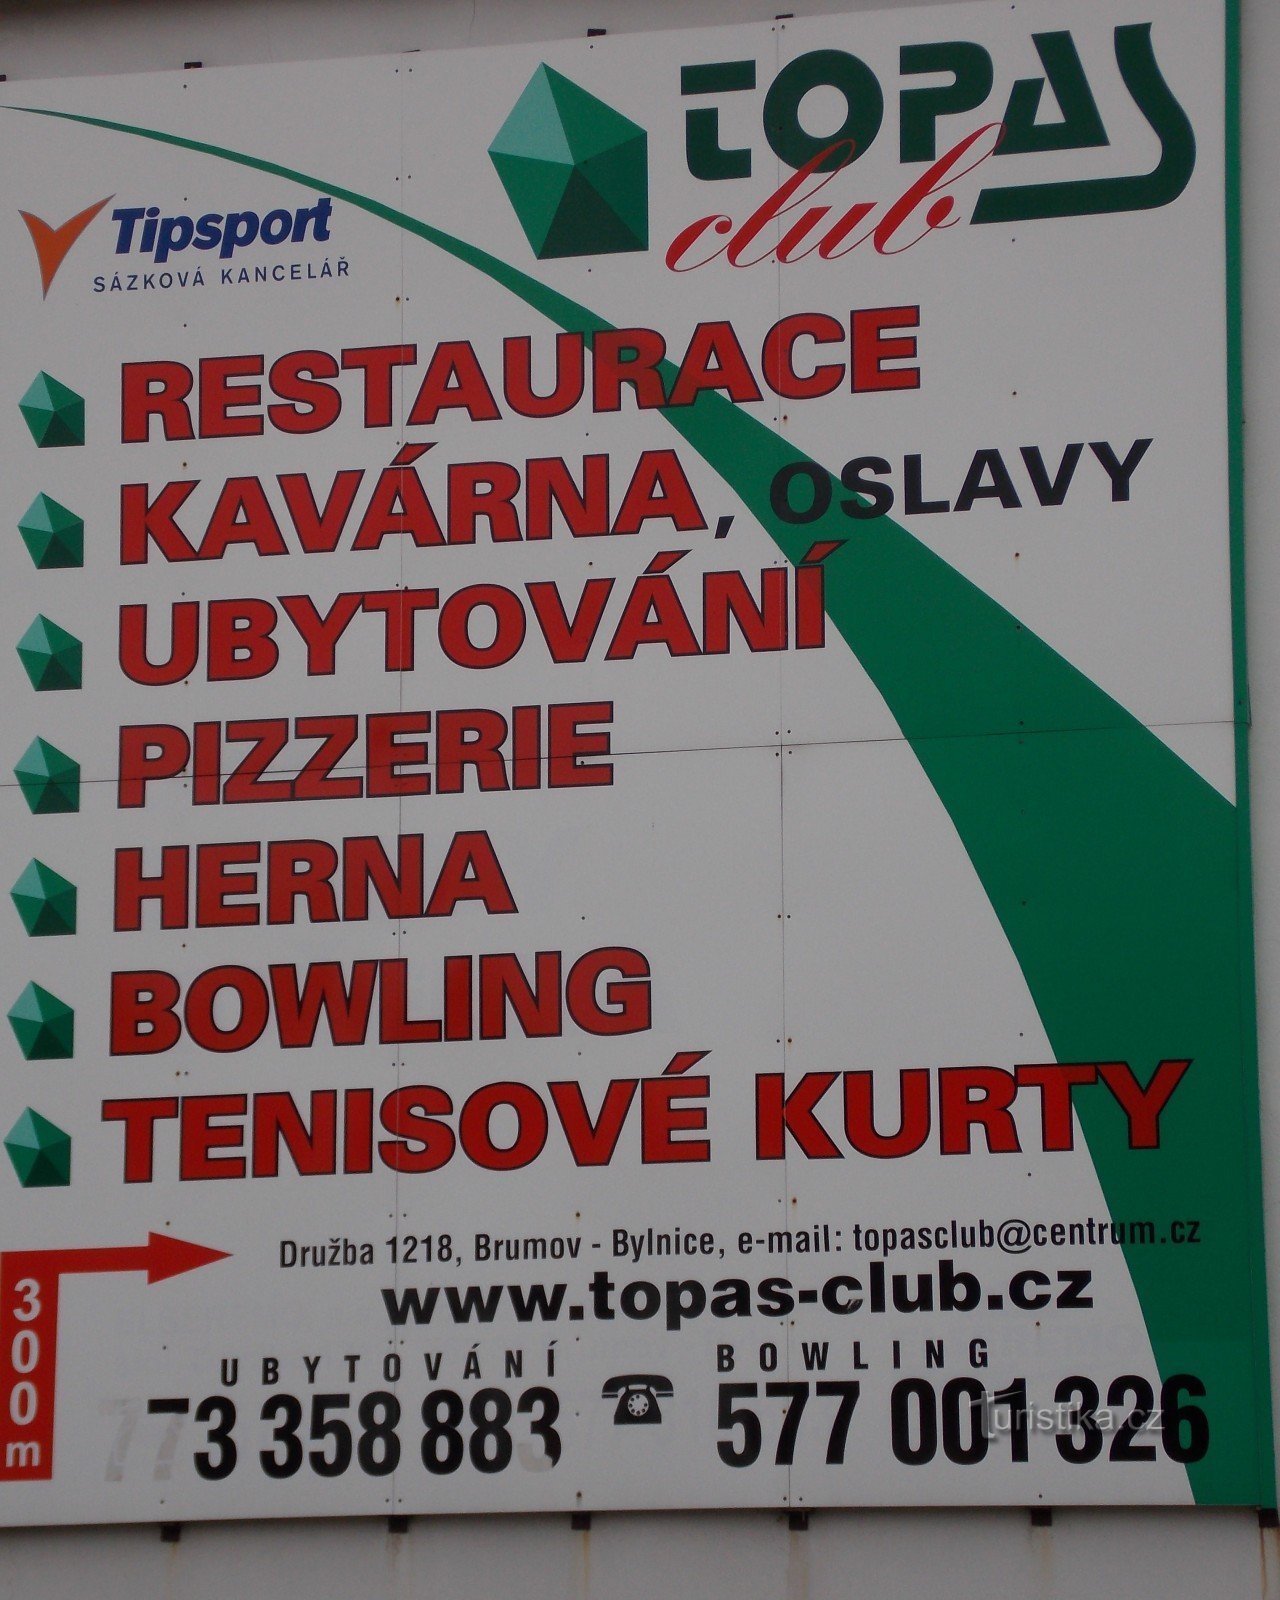 Clube Topas em Brumov - Bylnice